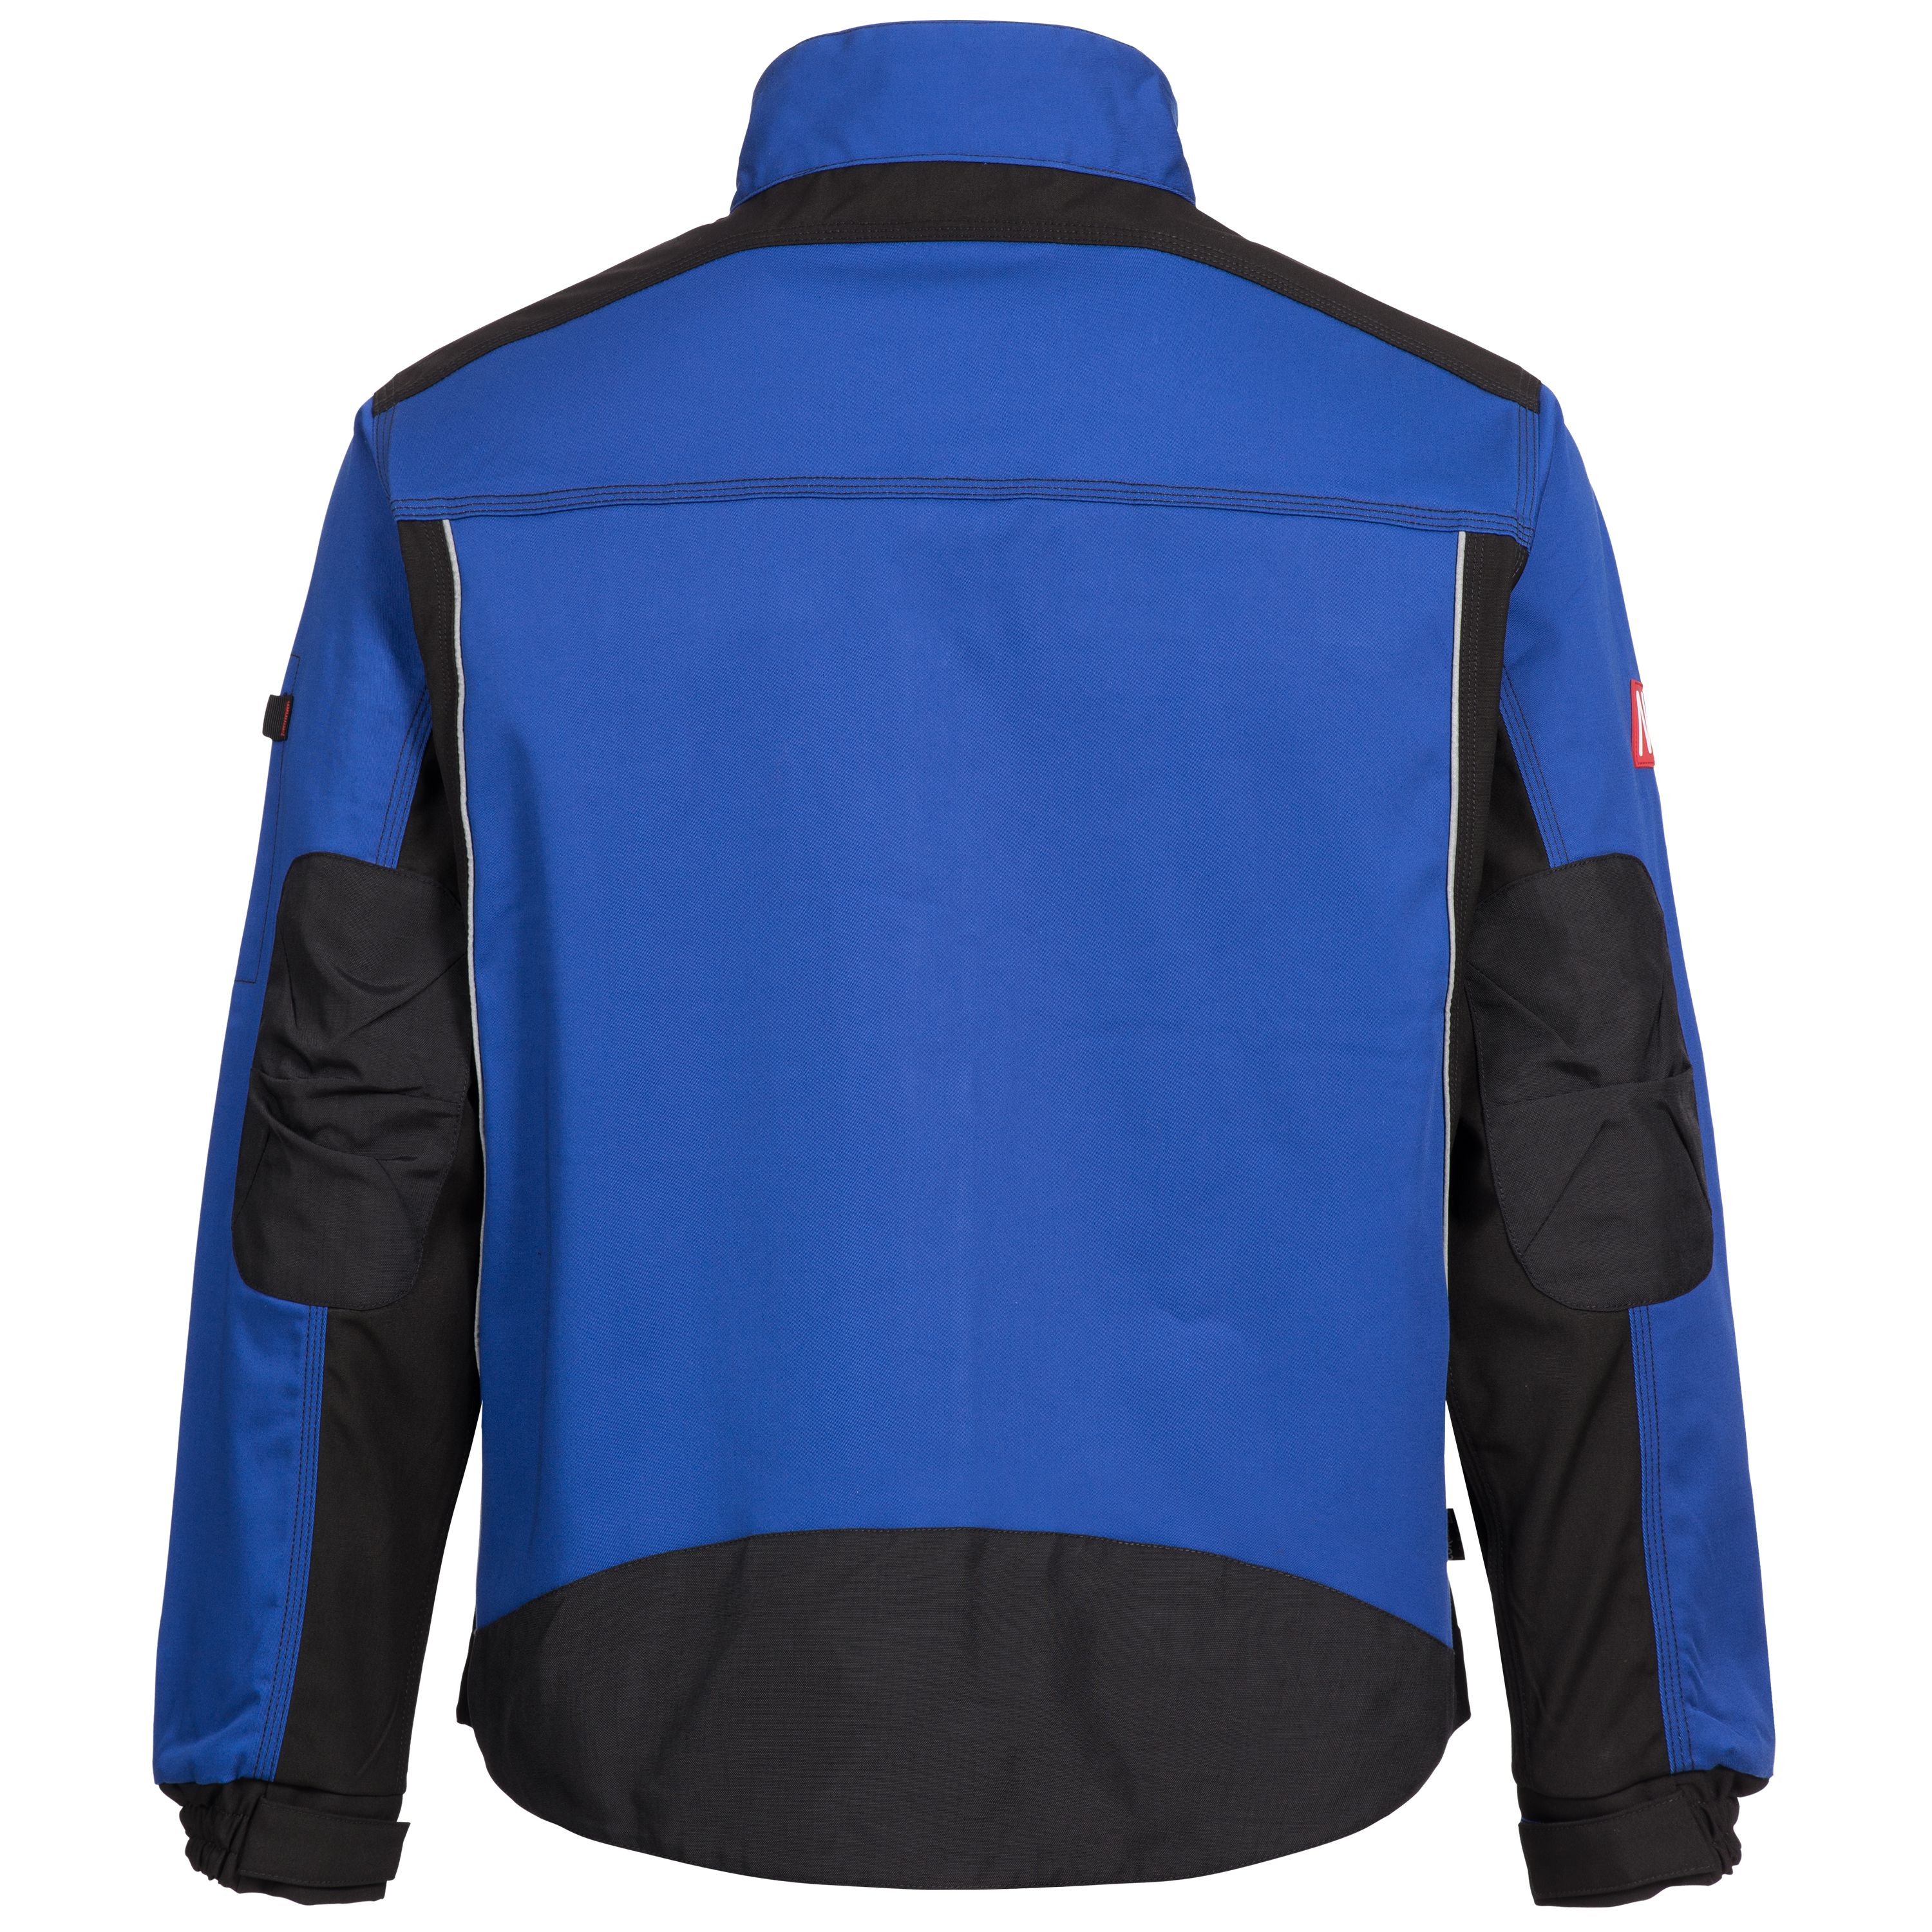 Nitras Motion Tex Pro FX 7751 Waist Jacket for Work - Blue - 52